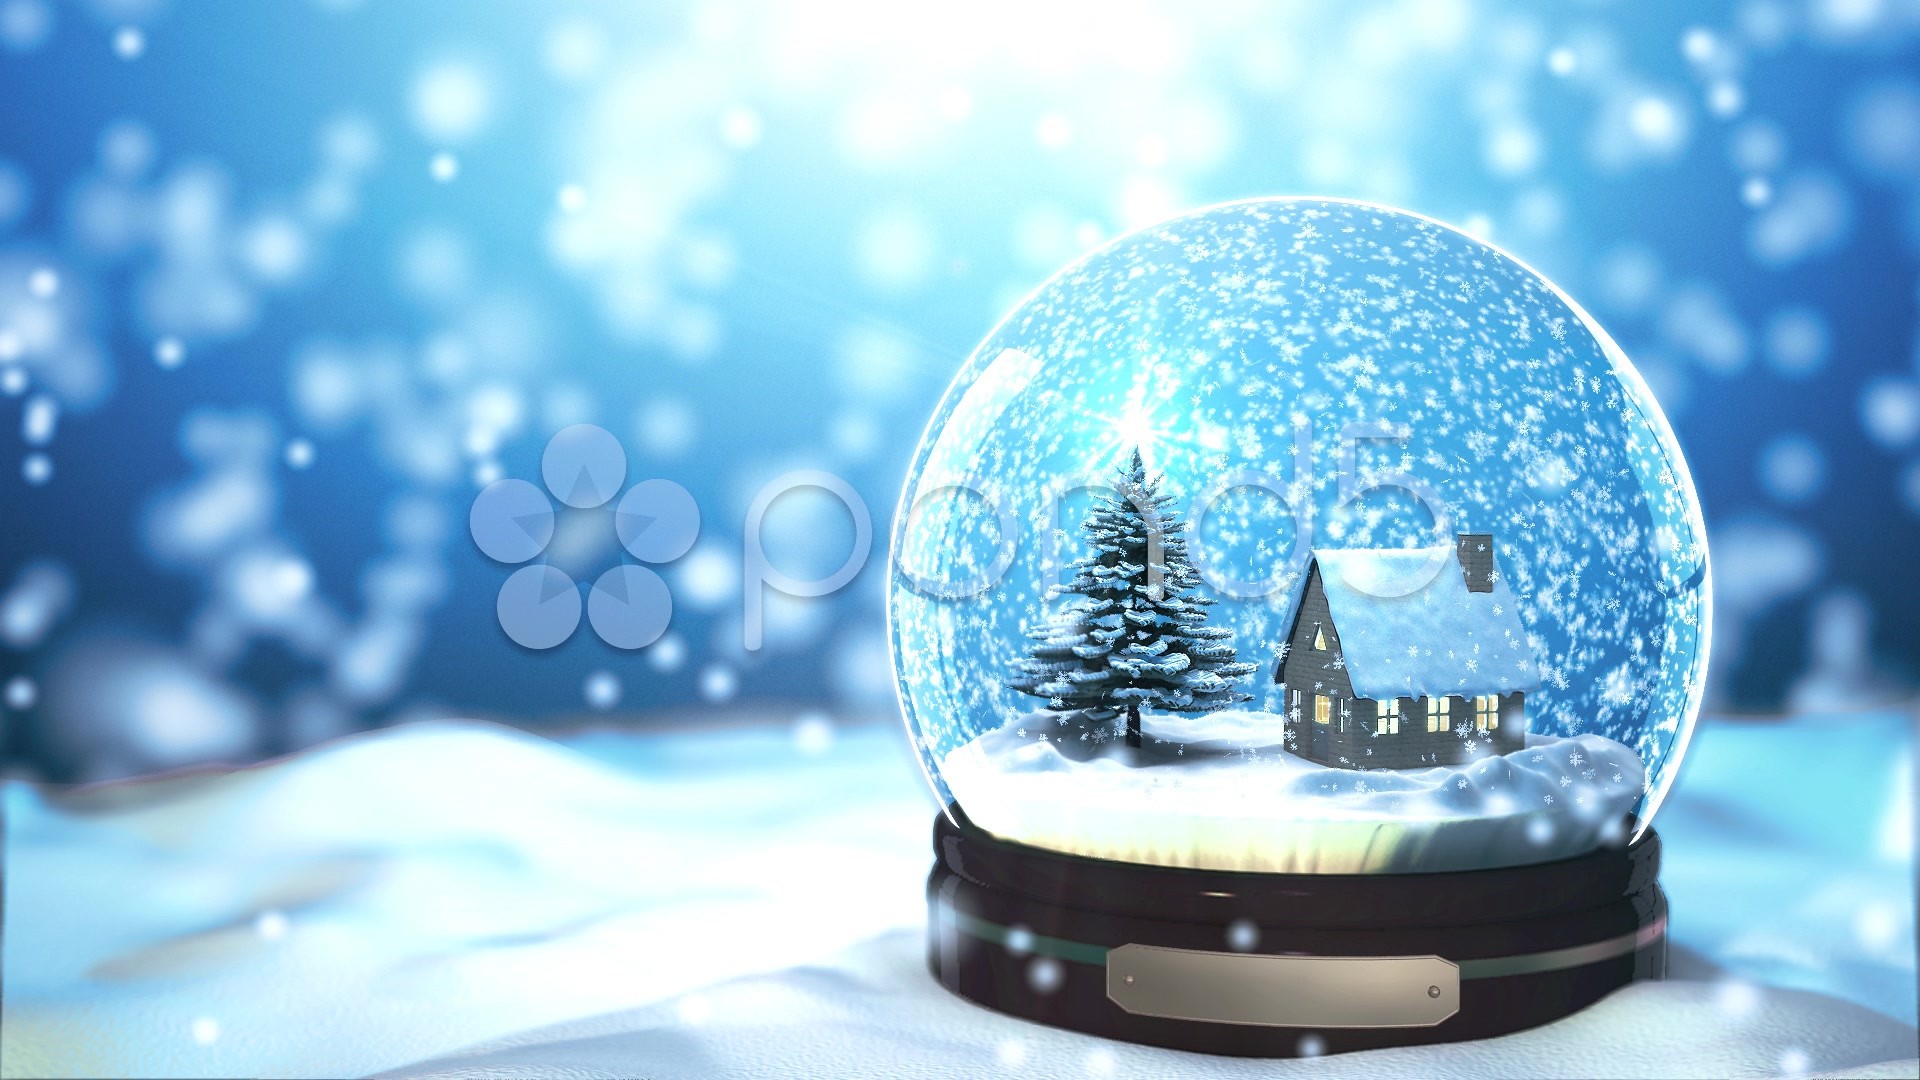 1920x1080 ... Christmas Snow Globe Wallpaper Desktop #h4164698, 0.39 Mb ...